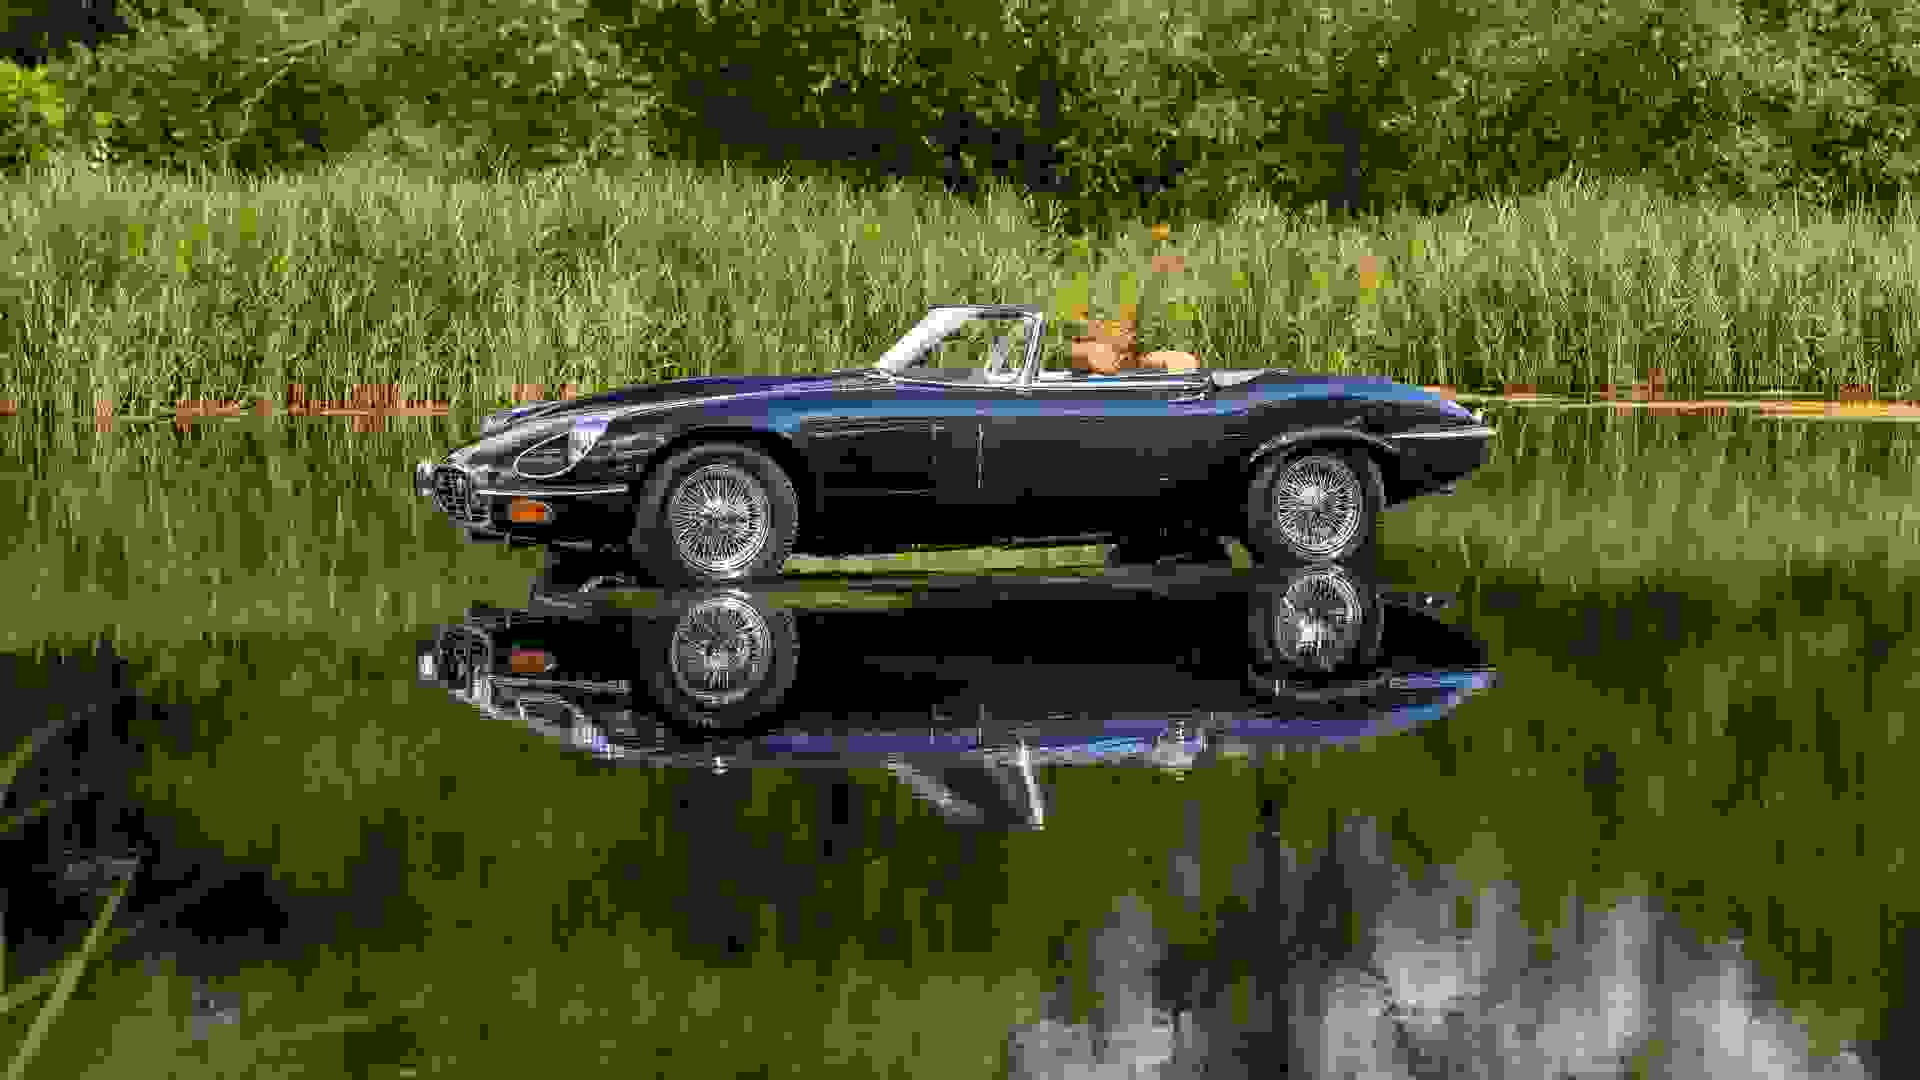 Jaguar E-TYPE Series 3 Photo 9ff67878-feec-4a4f-ad21-7b39d97ecf0c.jpg